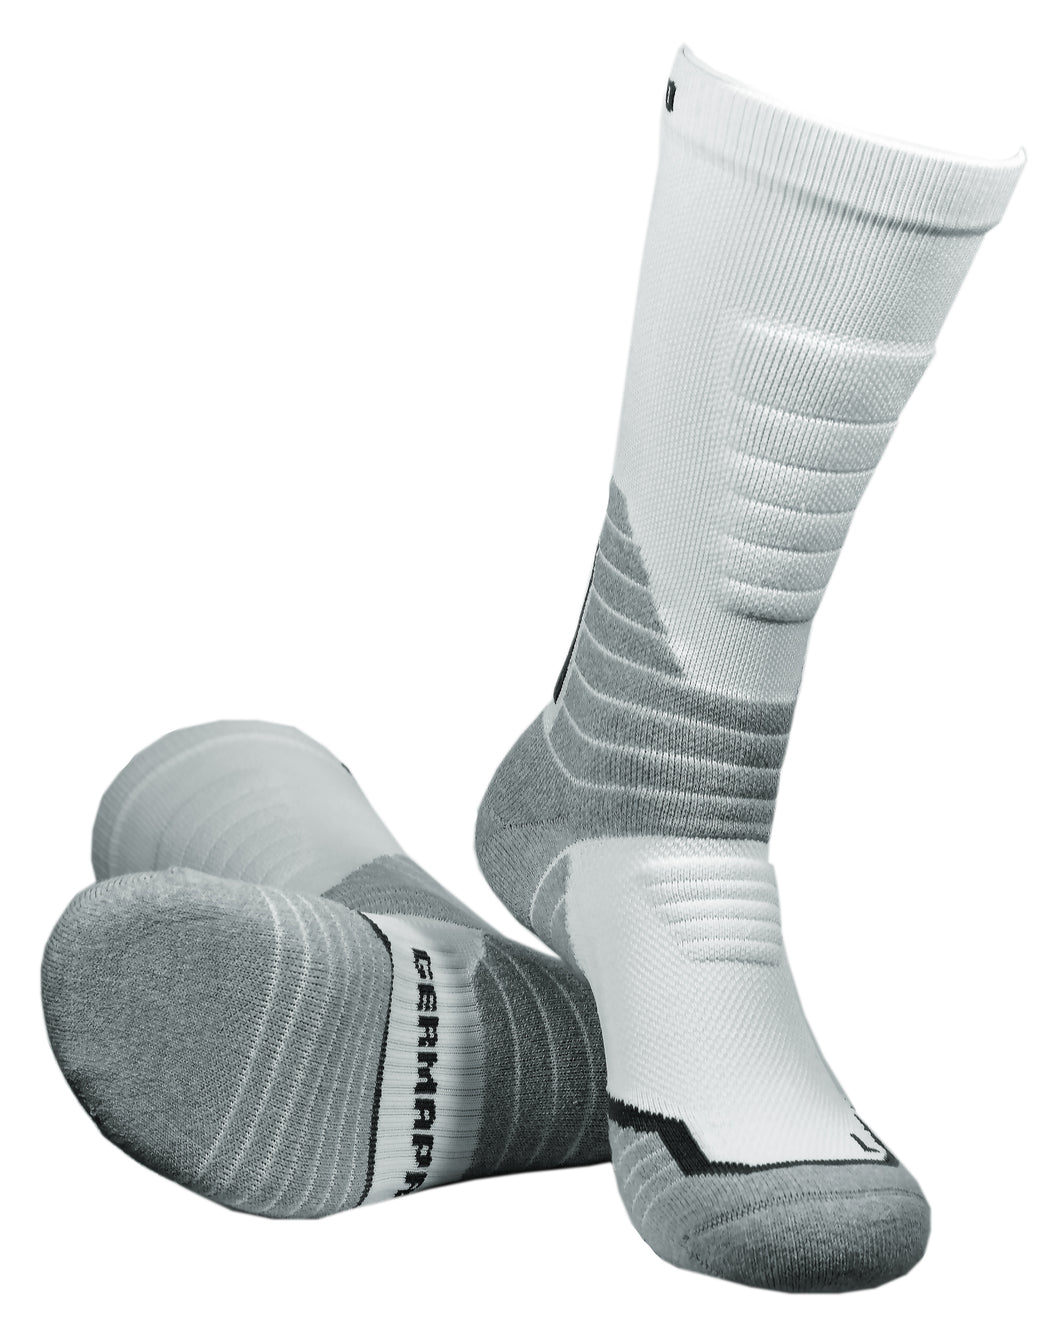 Black & White Boot Socks for Men & Women w/Anti Odor Moisture Wicking Germanium & Coolmax All Seasons 2 Pairs